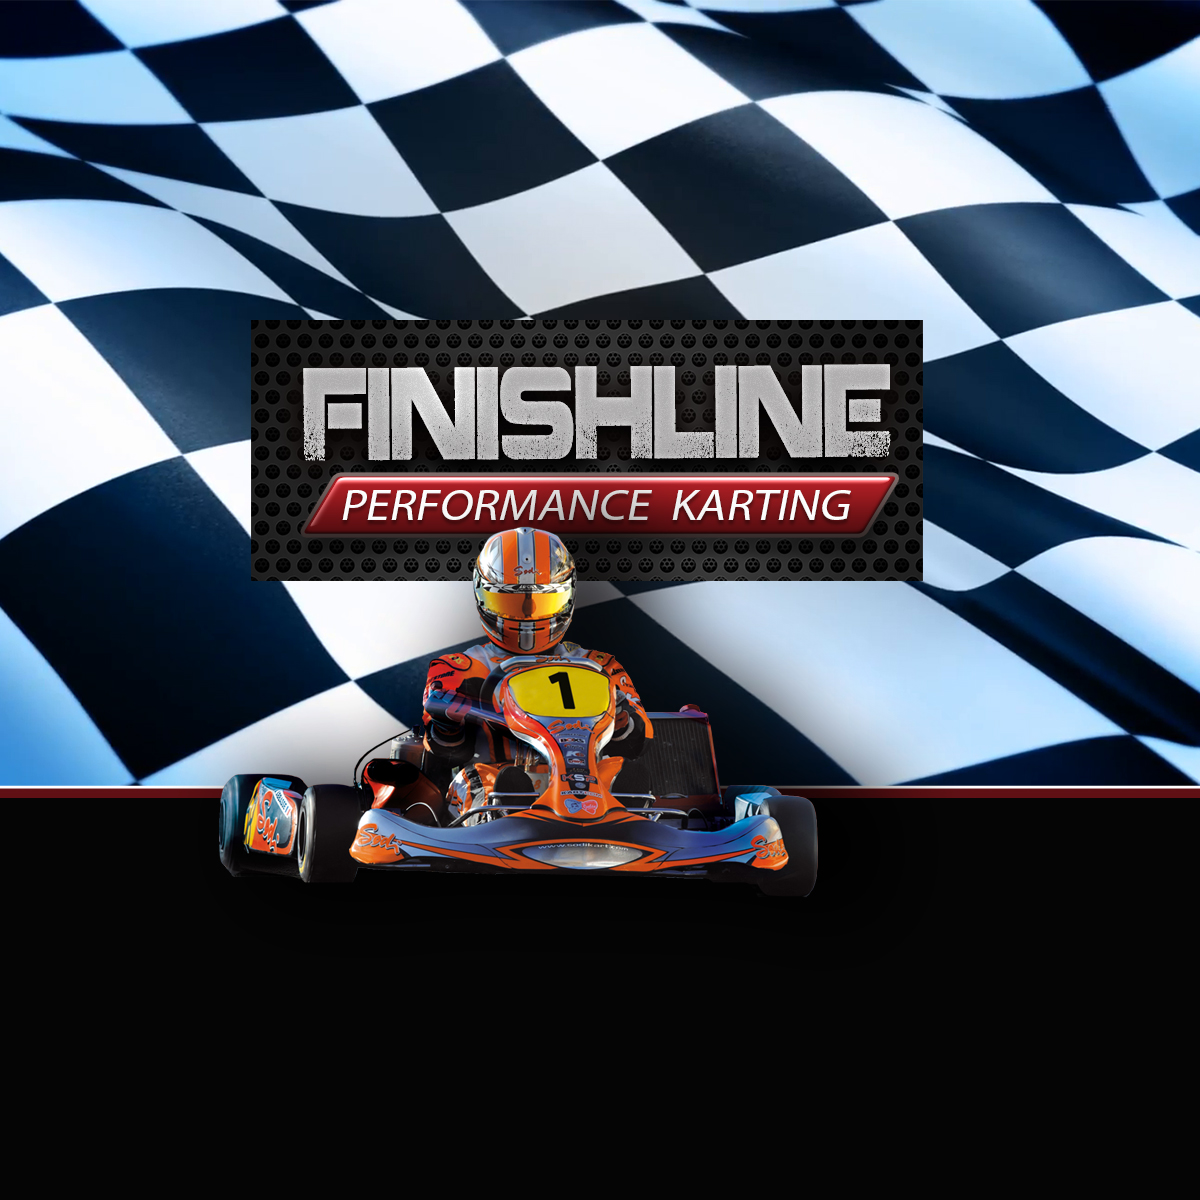 Finishline Performance Karting - Biloxi MS